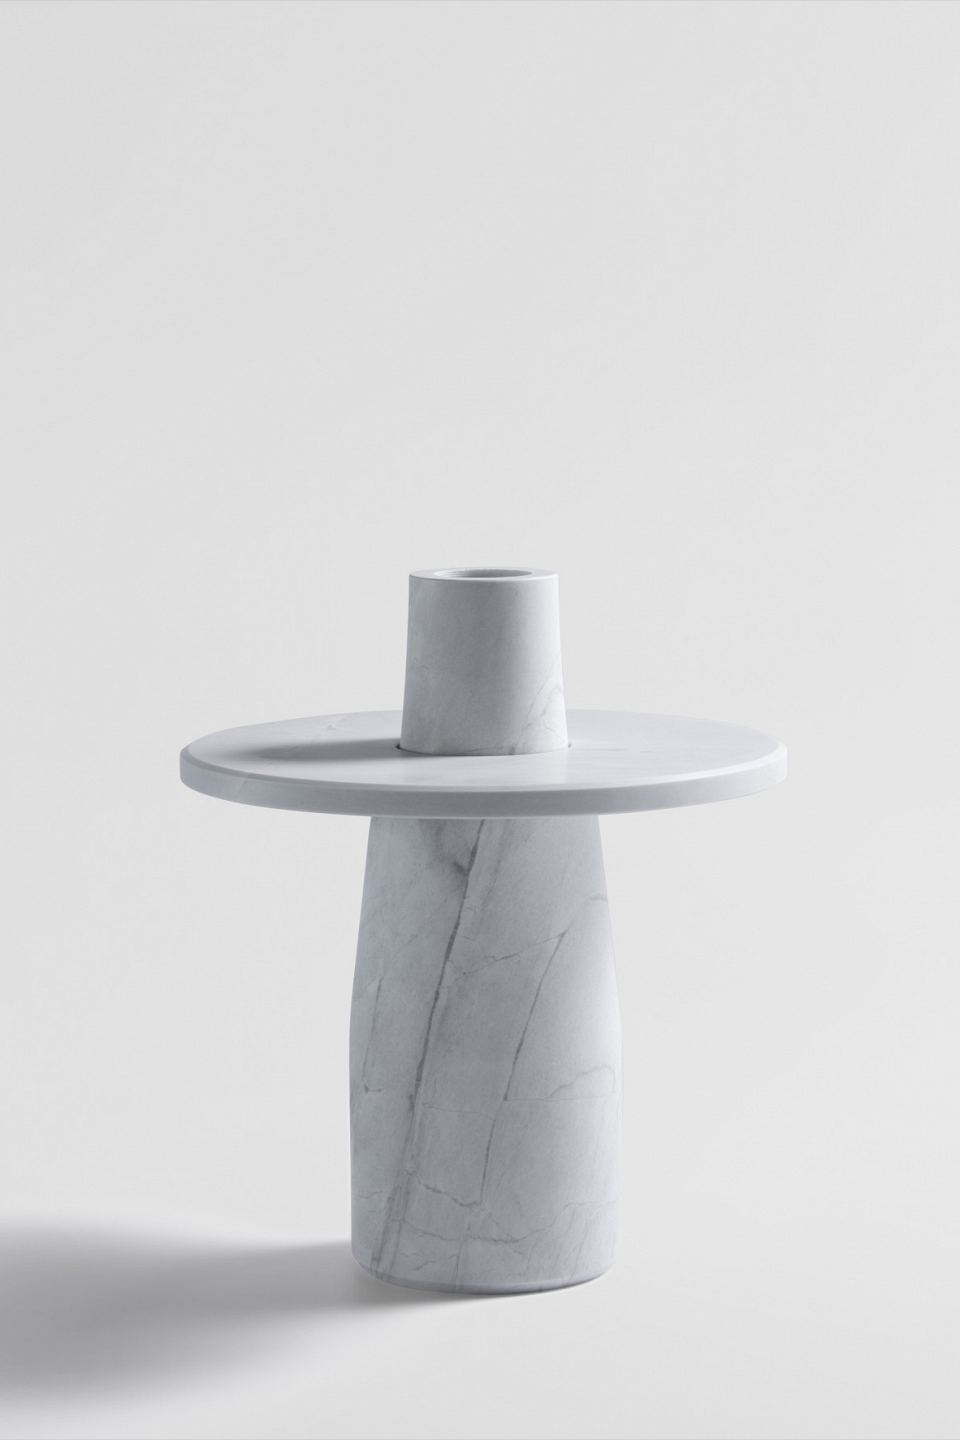 Artedomus New Volumes™ Semper Vase designed by Dale Hardiman.jpg